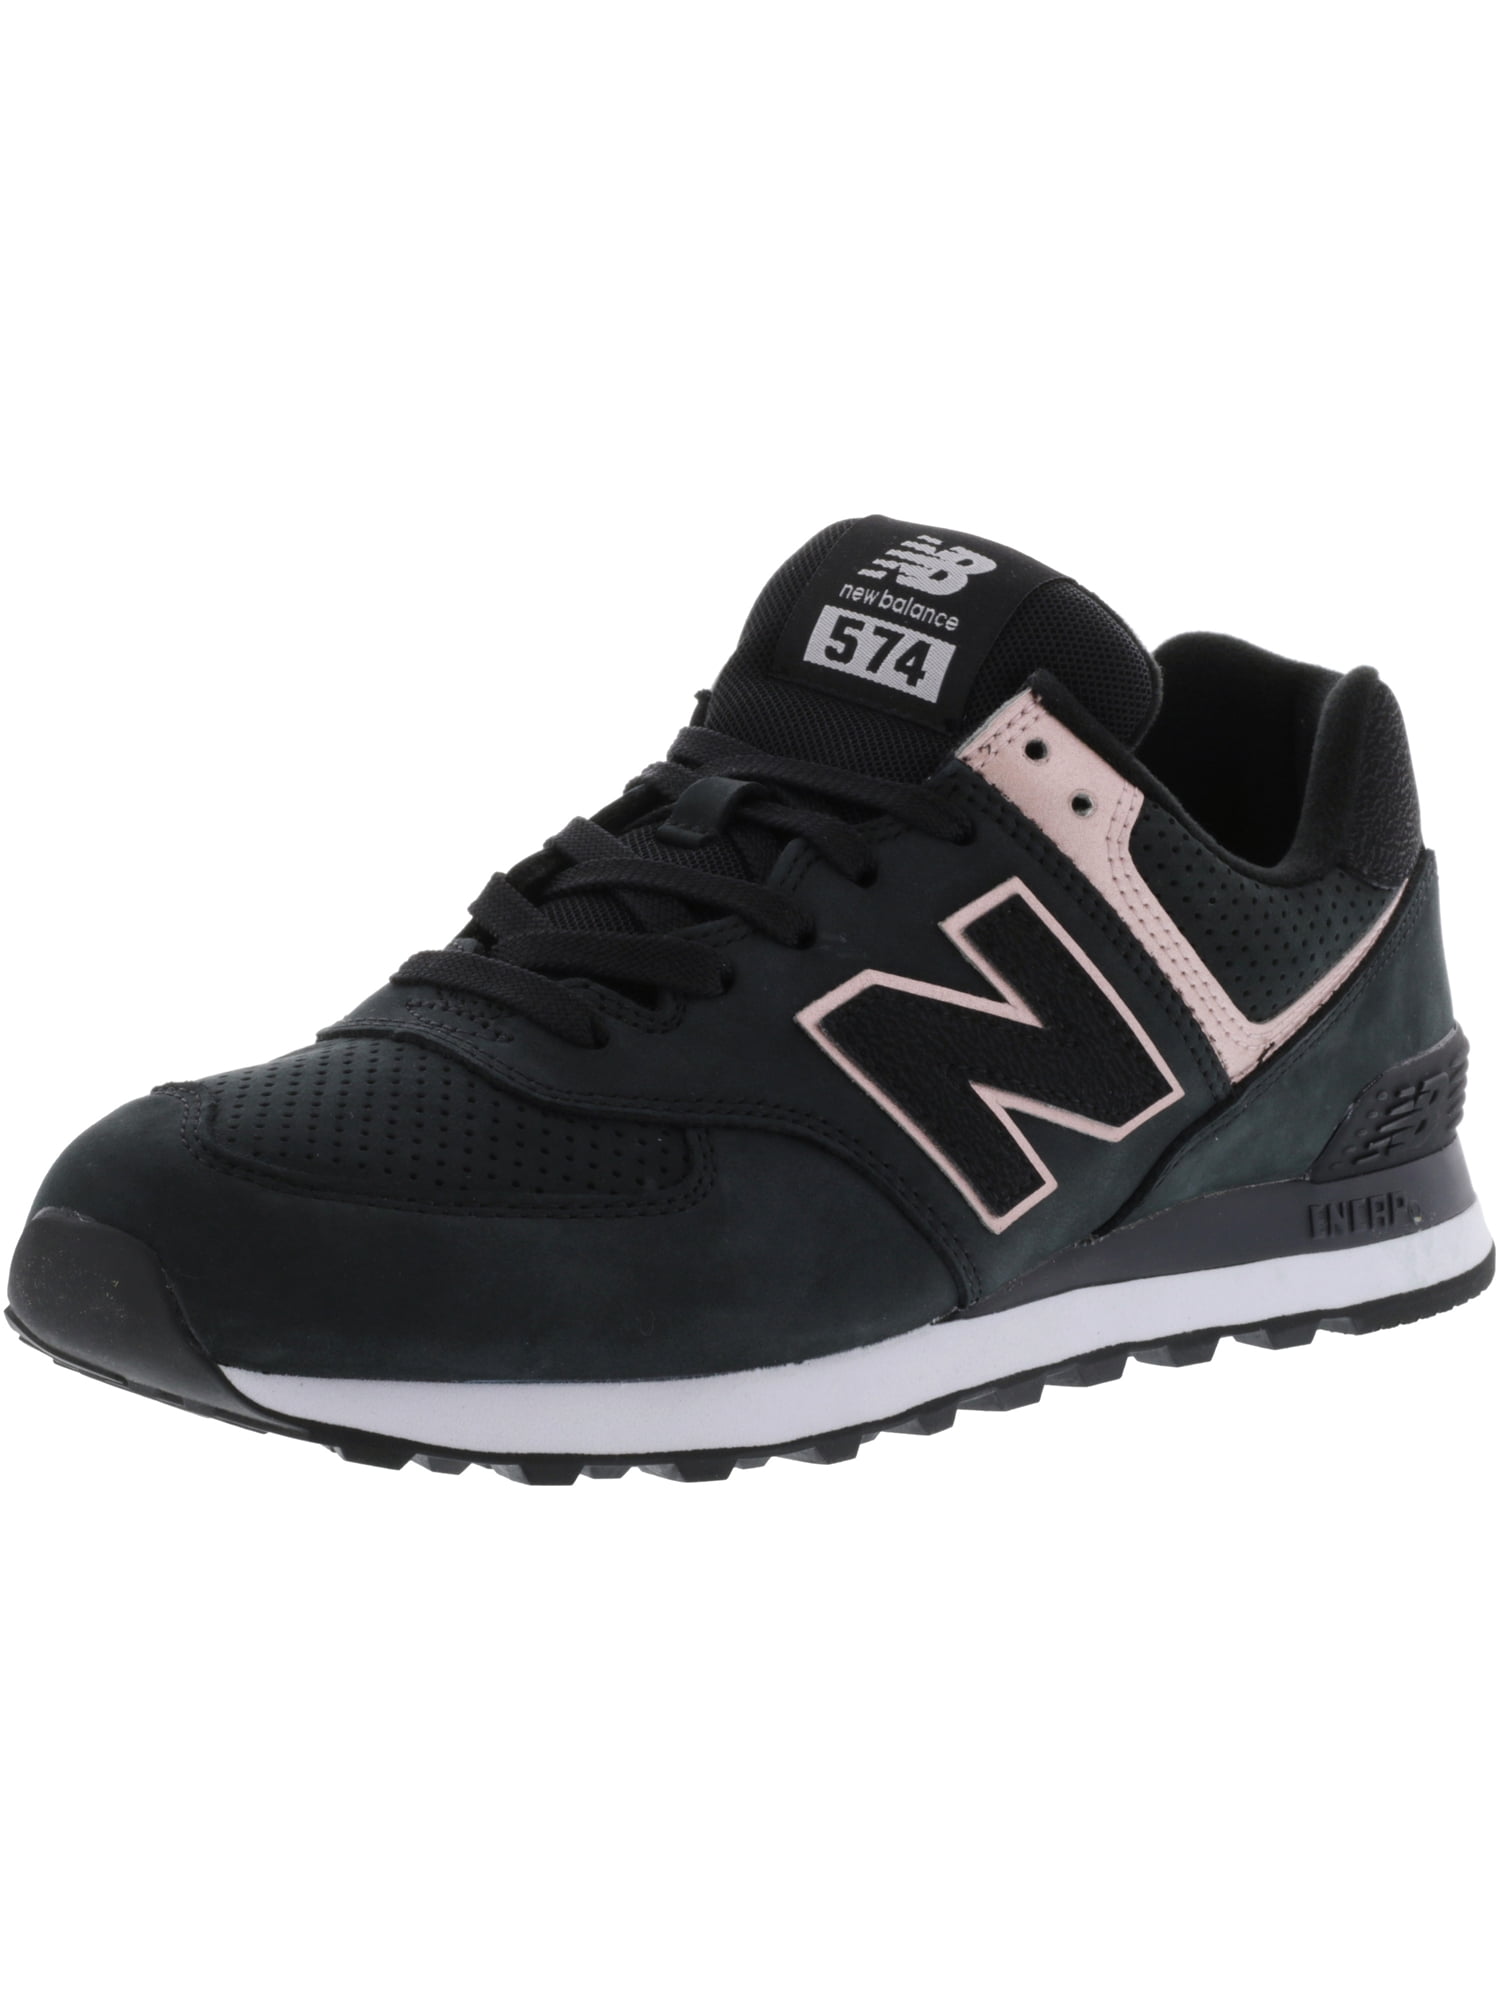 New Balance Women's L574 Nmc Ankle-High Leather Fashion Sneaker - 6.5M |  Walmart Canada